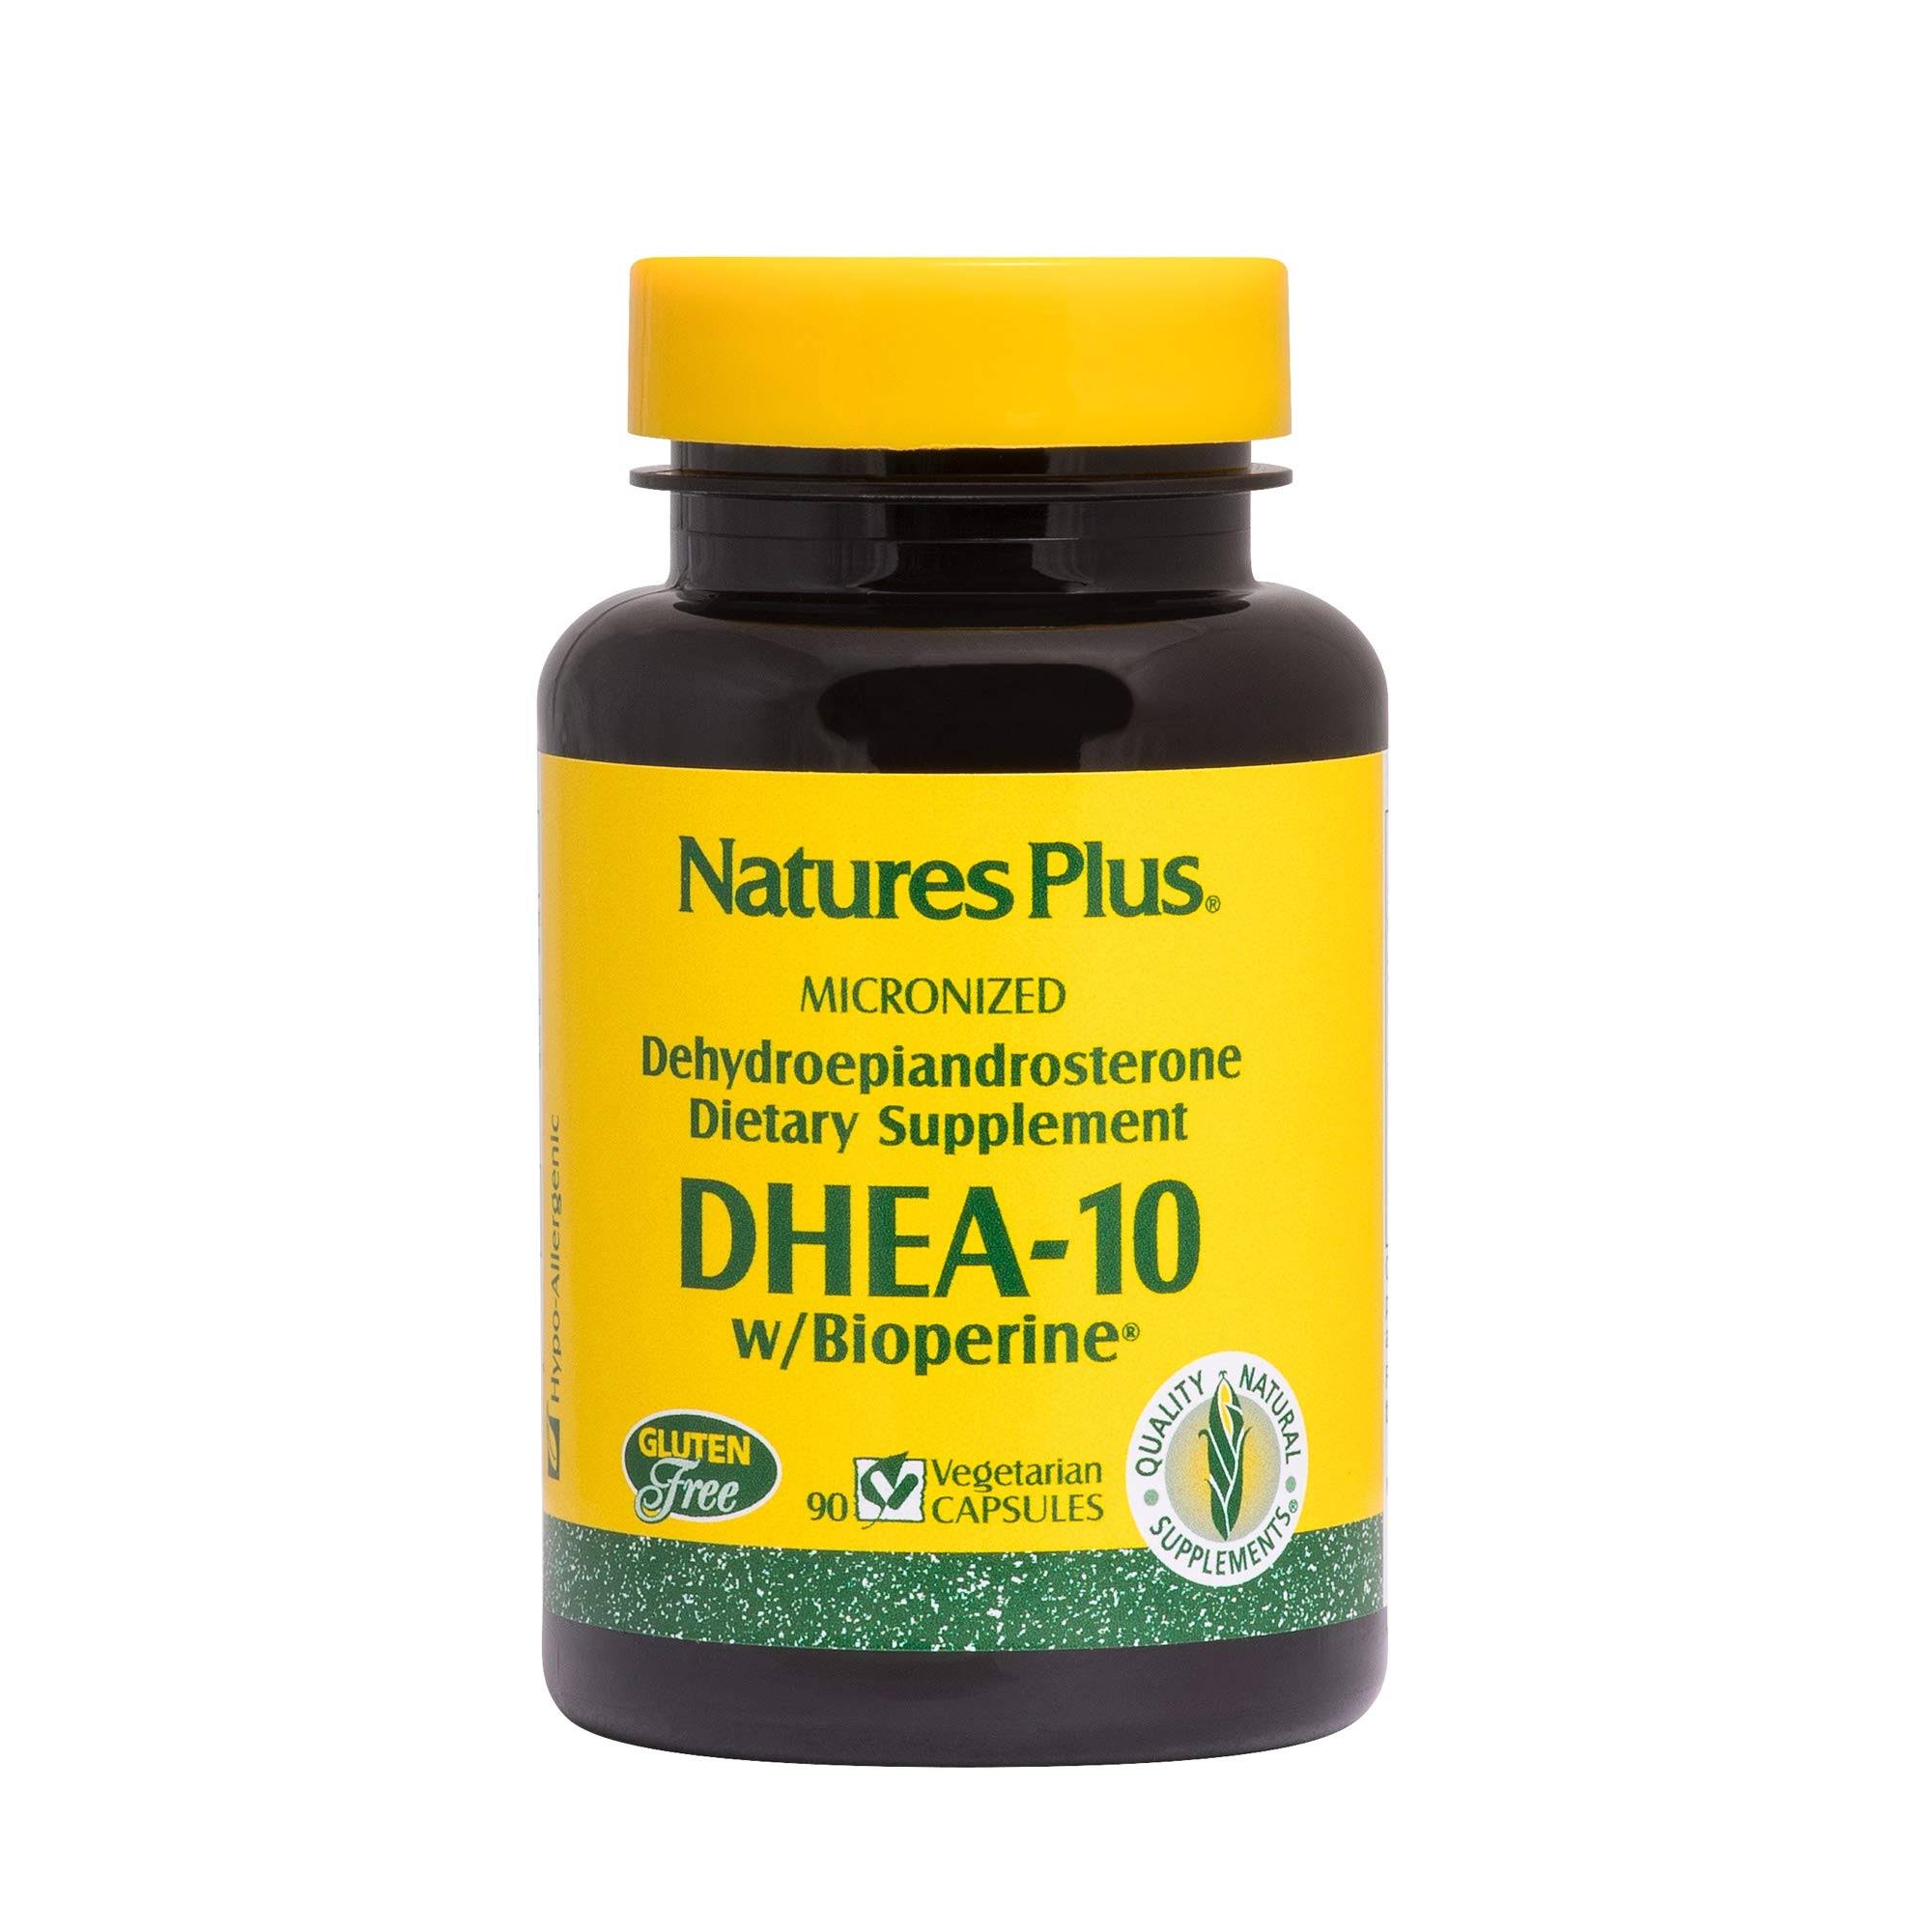 Nature's Plus Dhea-10 with Bioperine - 90ct